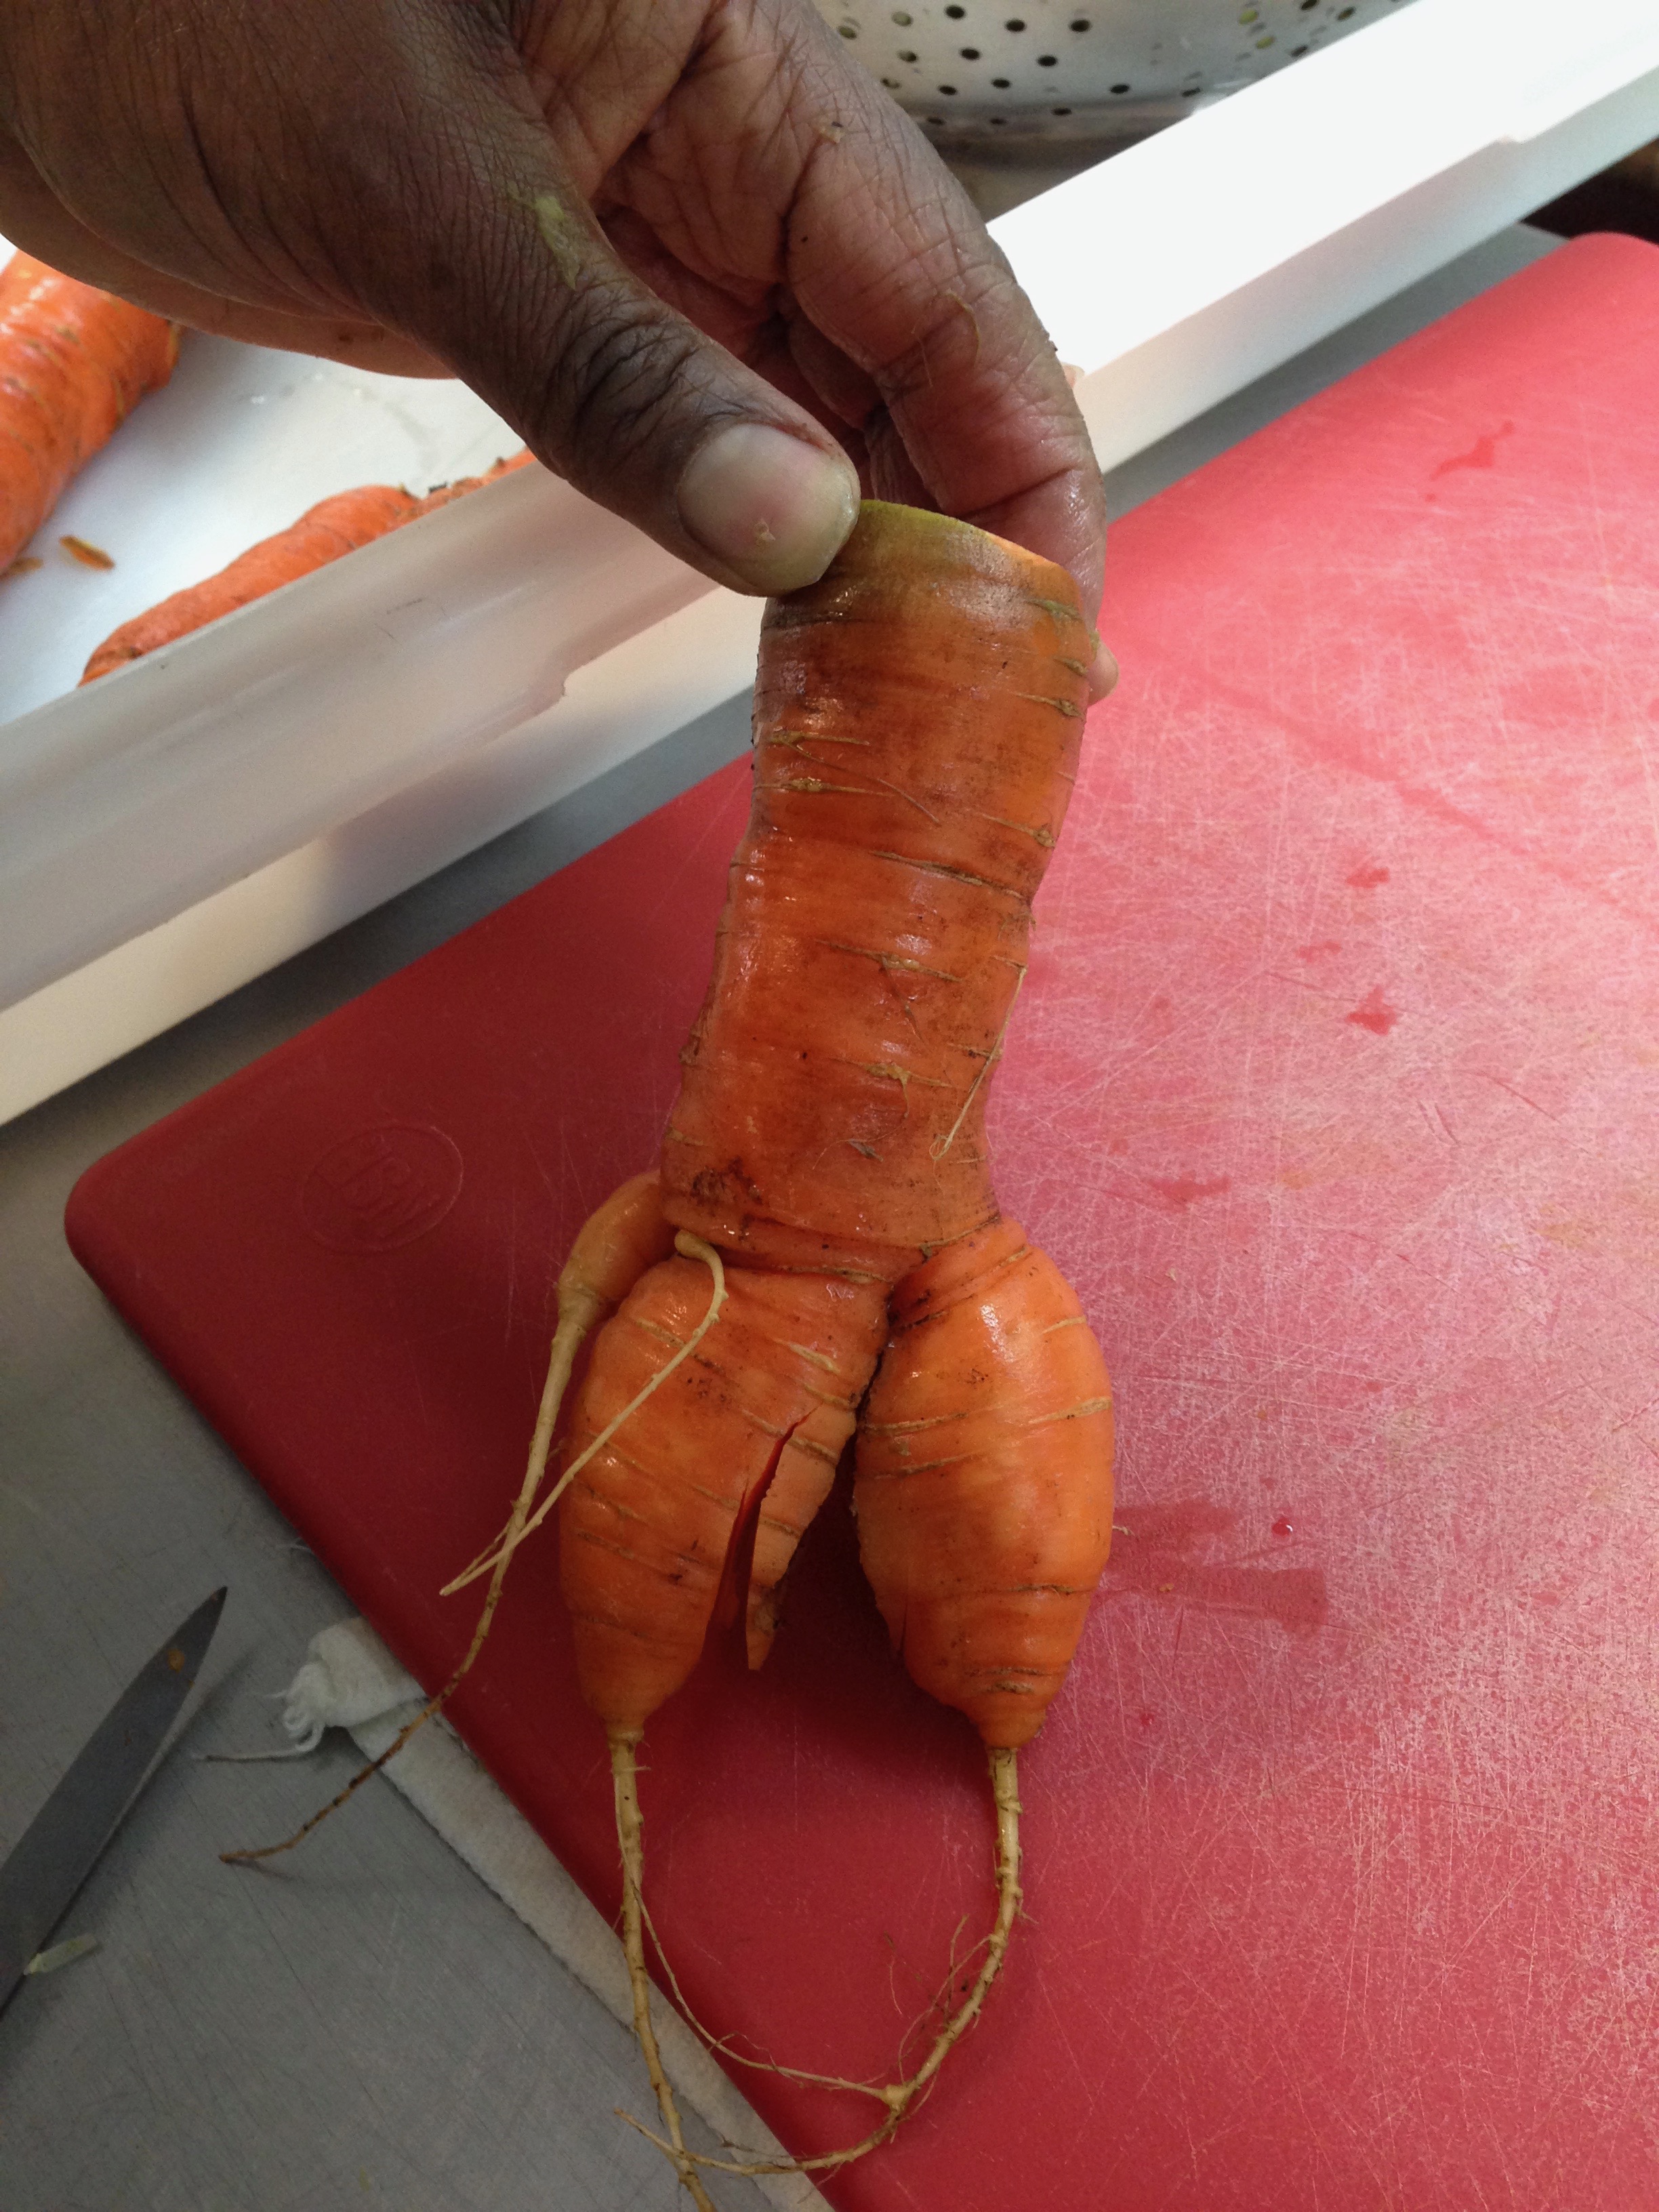 Not an imperfect carrot